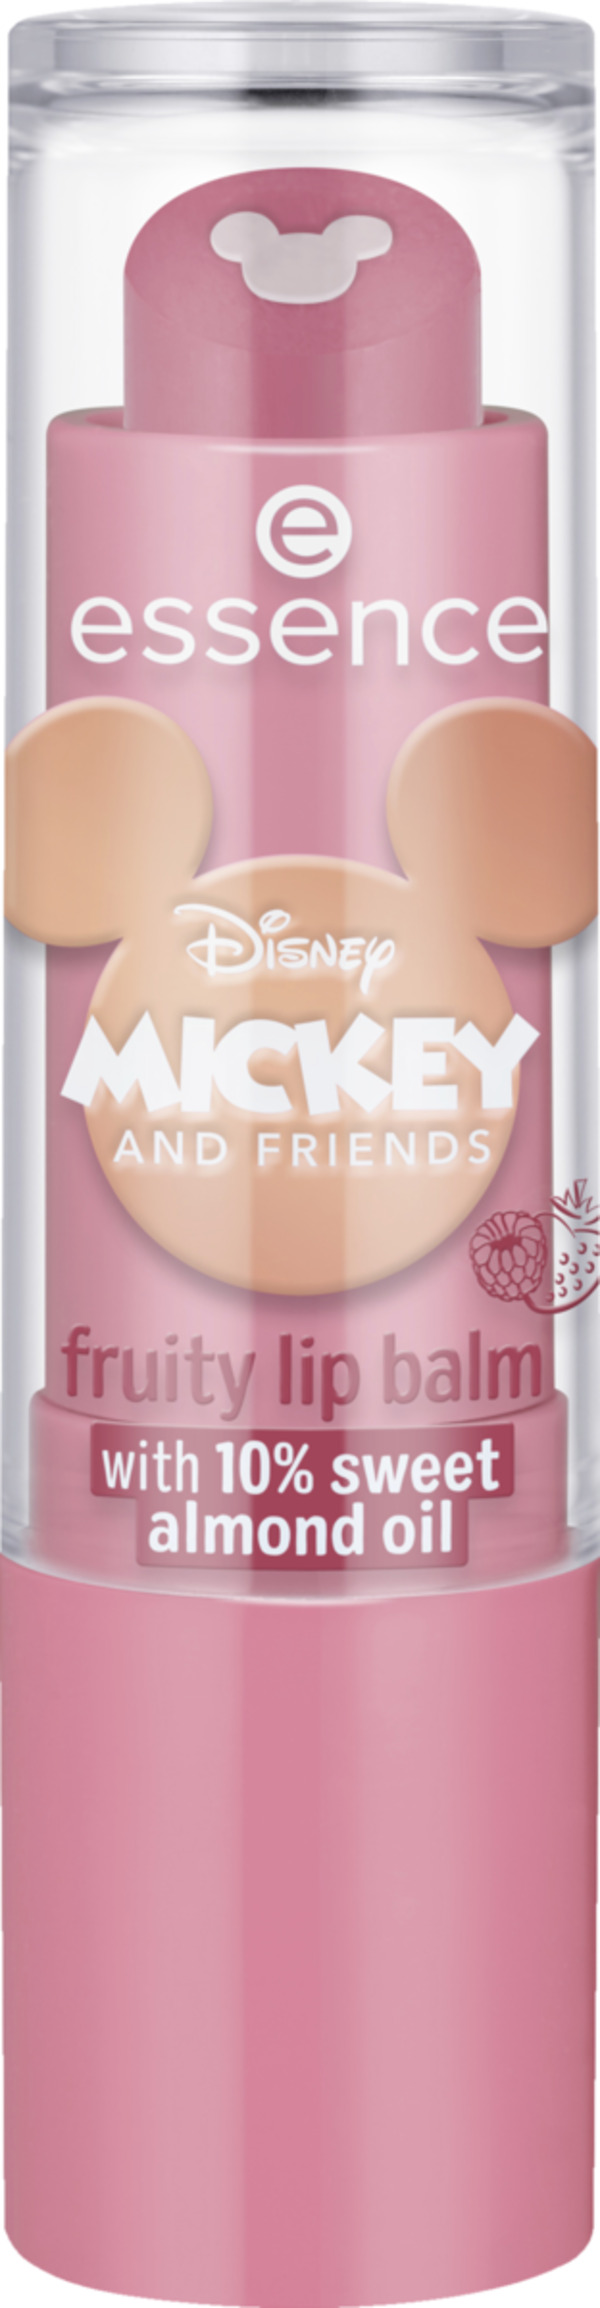 Bild 1 von essence Disney Mickey and Friends fruity lip balm 01 Oh cranberry!